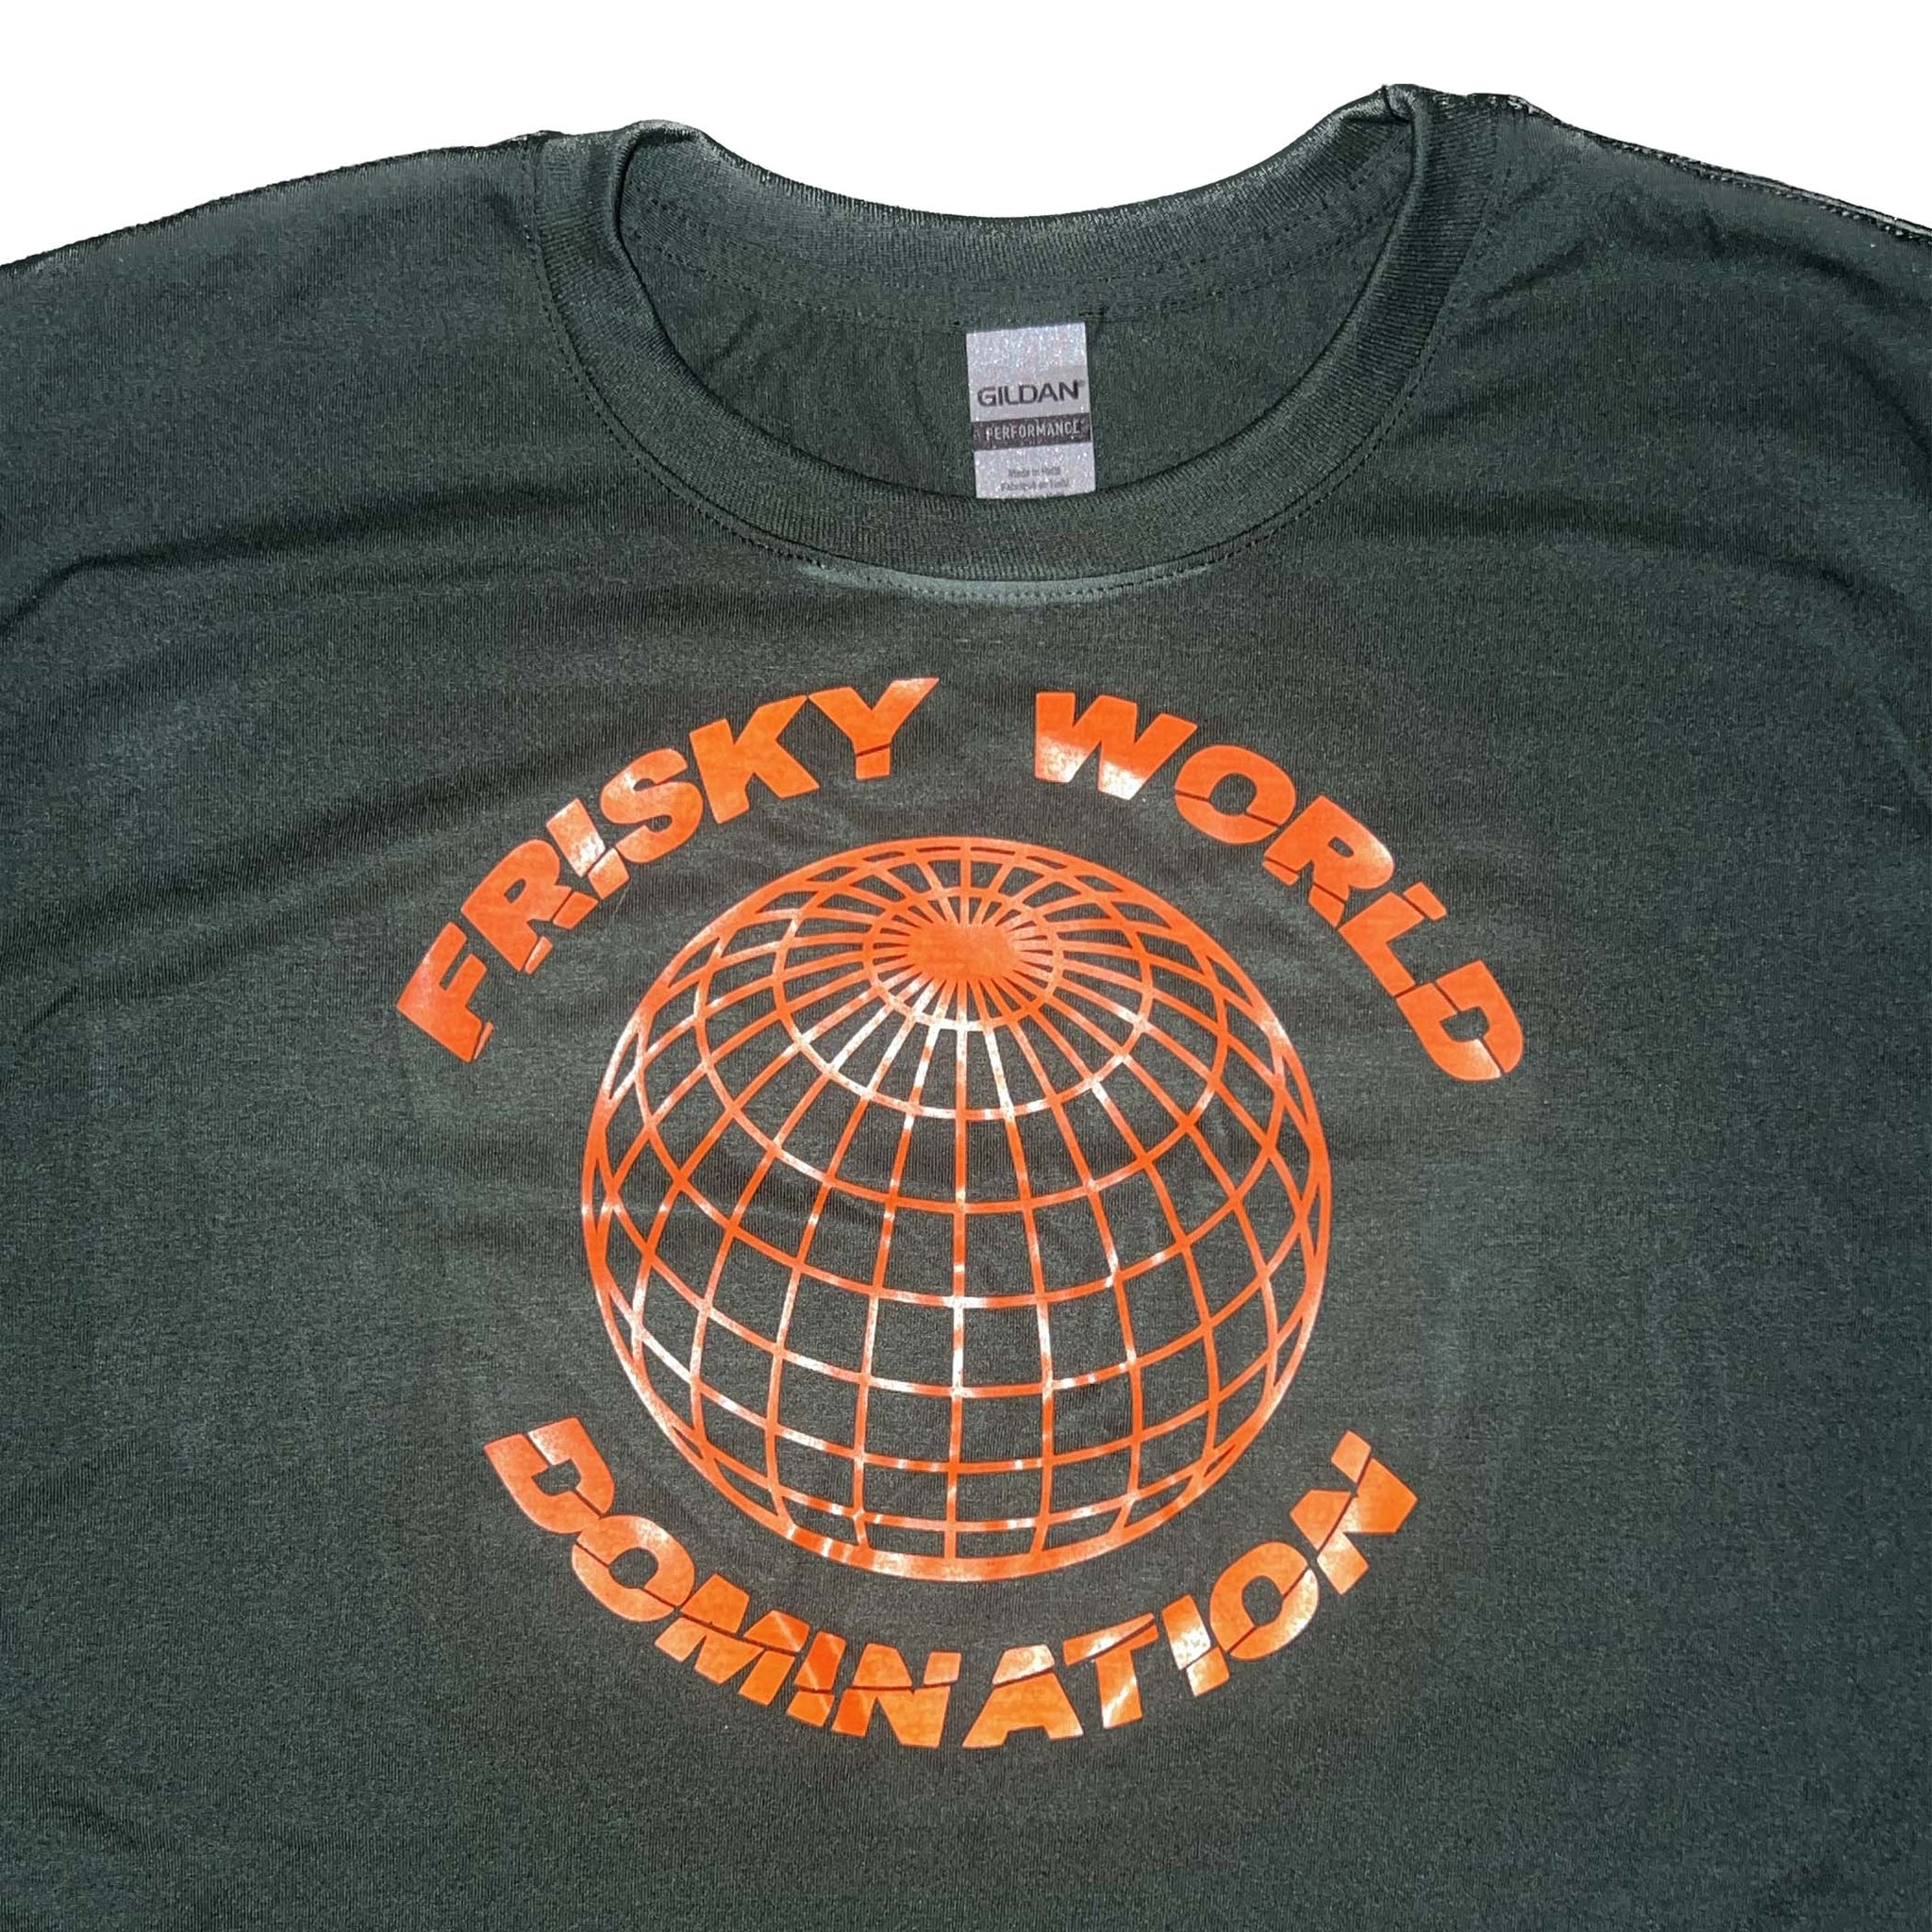 FRISKY WORLD DOMINATION T-SHIRT